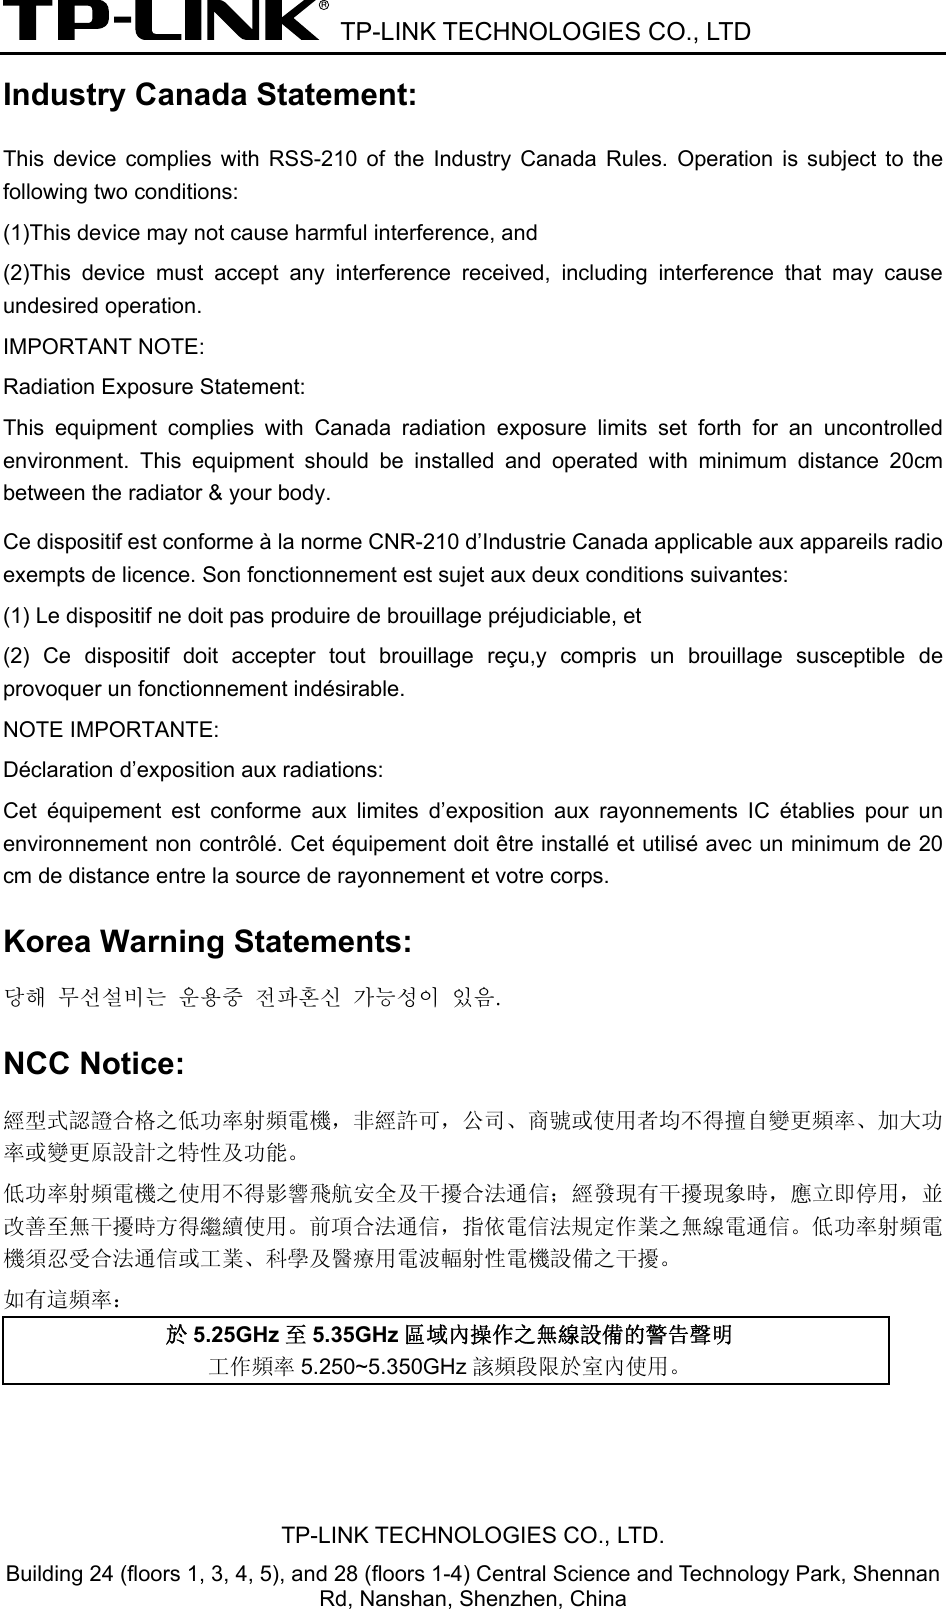  TP-LINK TECHNOLOGIES CO., LTD TP-LINK TECHNOLOGIES CO., LTD. Building 24 (floors 1, 3, 4, 5), and 28 (floors 1-4) Central Science and Technology Park, Shennan Rd, Nanshan, Shenzhen, China Industry Canada Statement: This device complies with RSS-210 of the Industry Canada Rules. Operation is subject to the following two conditions: (1)This device may not cause harmful interference, and   (2)This device must accept any interference received, including interference that may cause undesired operation. IMPORTANT NOTE: Radiation Exposure Statement: This equipment complies with Canada radiation exposure limits set forth for an uncontrolled environment. This equipment should be installed and operated with minimum distance 20cm between the radiator &amp; your body. Ce dispositif est conforme à la norme CNR-210 d’Industrie Canada applicable aux appareils radio exempts de licence. Son fonctionnement est sujet aux deux conditions suivantes: (1) Le dispositif ne doit pas produire de brouillage préjudiciable, et   (2) Ce dispositif doit accepter tout brouillage reçu,y compris un brouillage susceptible de provoquer un fonctionnement indésirable. NOTE IMPORTANTE:   Déclaration d’exposition aux radiations: Cet équipement est conforme aux limites d’exposition aux rayonnements IC établies pour un environnement non contrôlé. Cet équipement doit être installé et utilisé avec un minimum de 20 cm de distance entre la source de rayonnement et votre corps.   Korea Warning Statements: 당해 무선설비는 운용중 전파혼신 가능성이 있음. NCC Notice: 經型式認證合格之低功率射頻電機，非經許可，公司、商號或使用者均不得擅自變更頻率、加大功率或變更原設計之特性及功能。 低功率射頻電機之使用不得影響飛航安全及干擾合法通信；經發現有干擾現象時，應立即停用，並改善至無干擾時方得繼續使用。前項合法通信，指依電信法規定作業之無線電通信。低功率射頻電機須忍受合法通信或工業、科學及醫療用電波輻射性電機設備之干擾。 如有這頻率： 於5.25GHz 至5.35GHz 區域內操作之無線設備的警告聲明 工作頻率 5.250~5.350GHz 該頻段限於室內使用。  